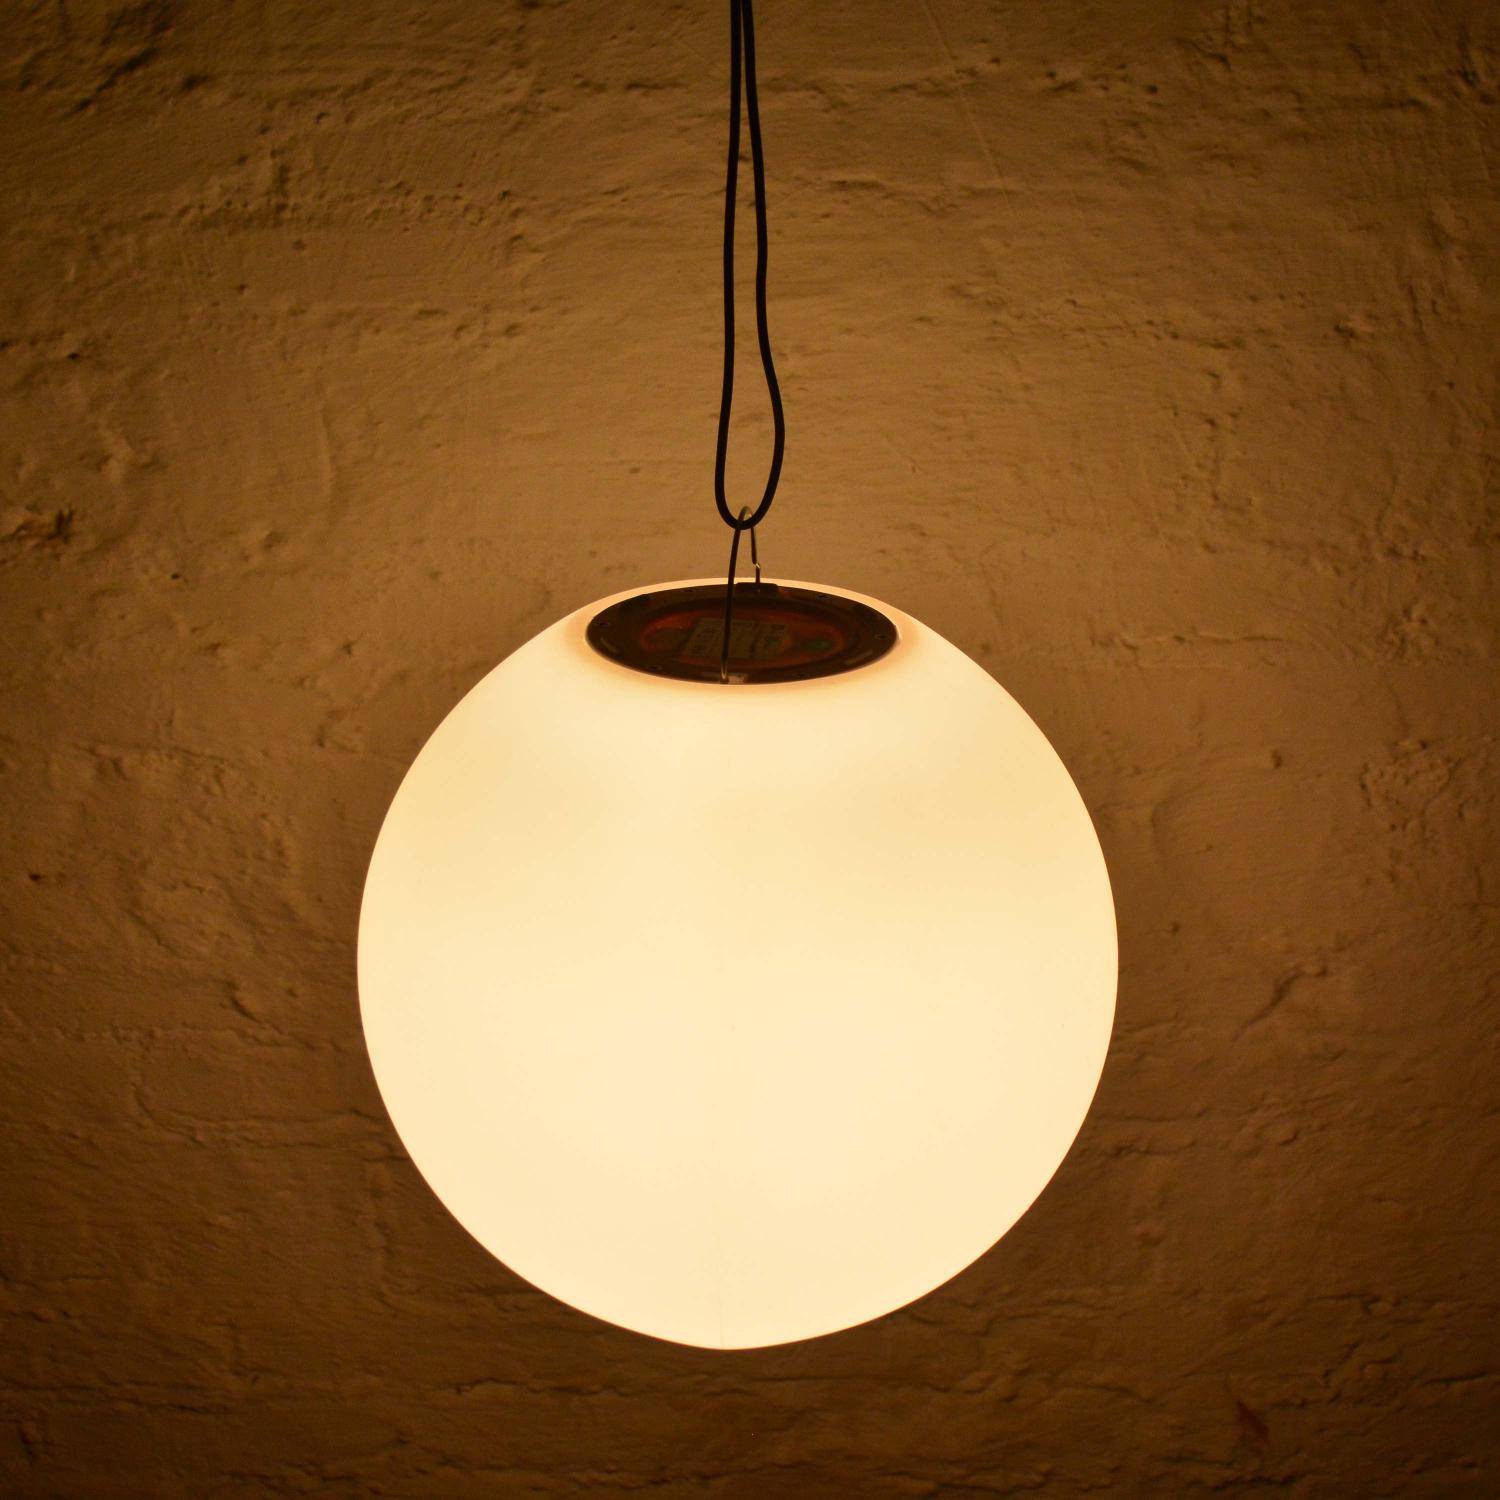 30cm spherical LED lamp – Decorative light sphere, remote control, Warm white,sweeek,Photo2